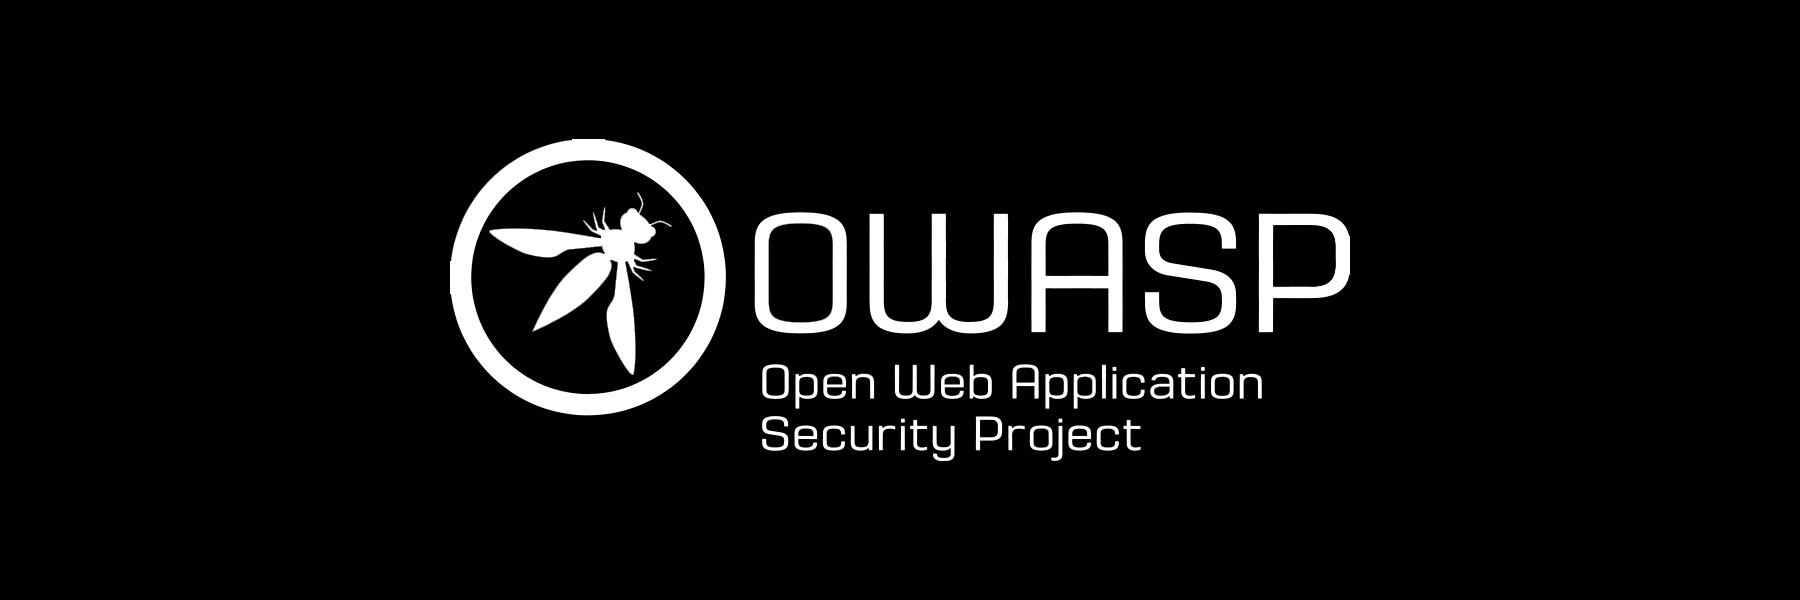 OWASP www-chapter-owasp-itanagar